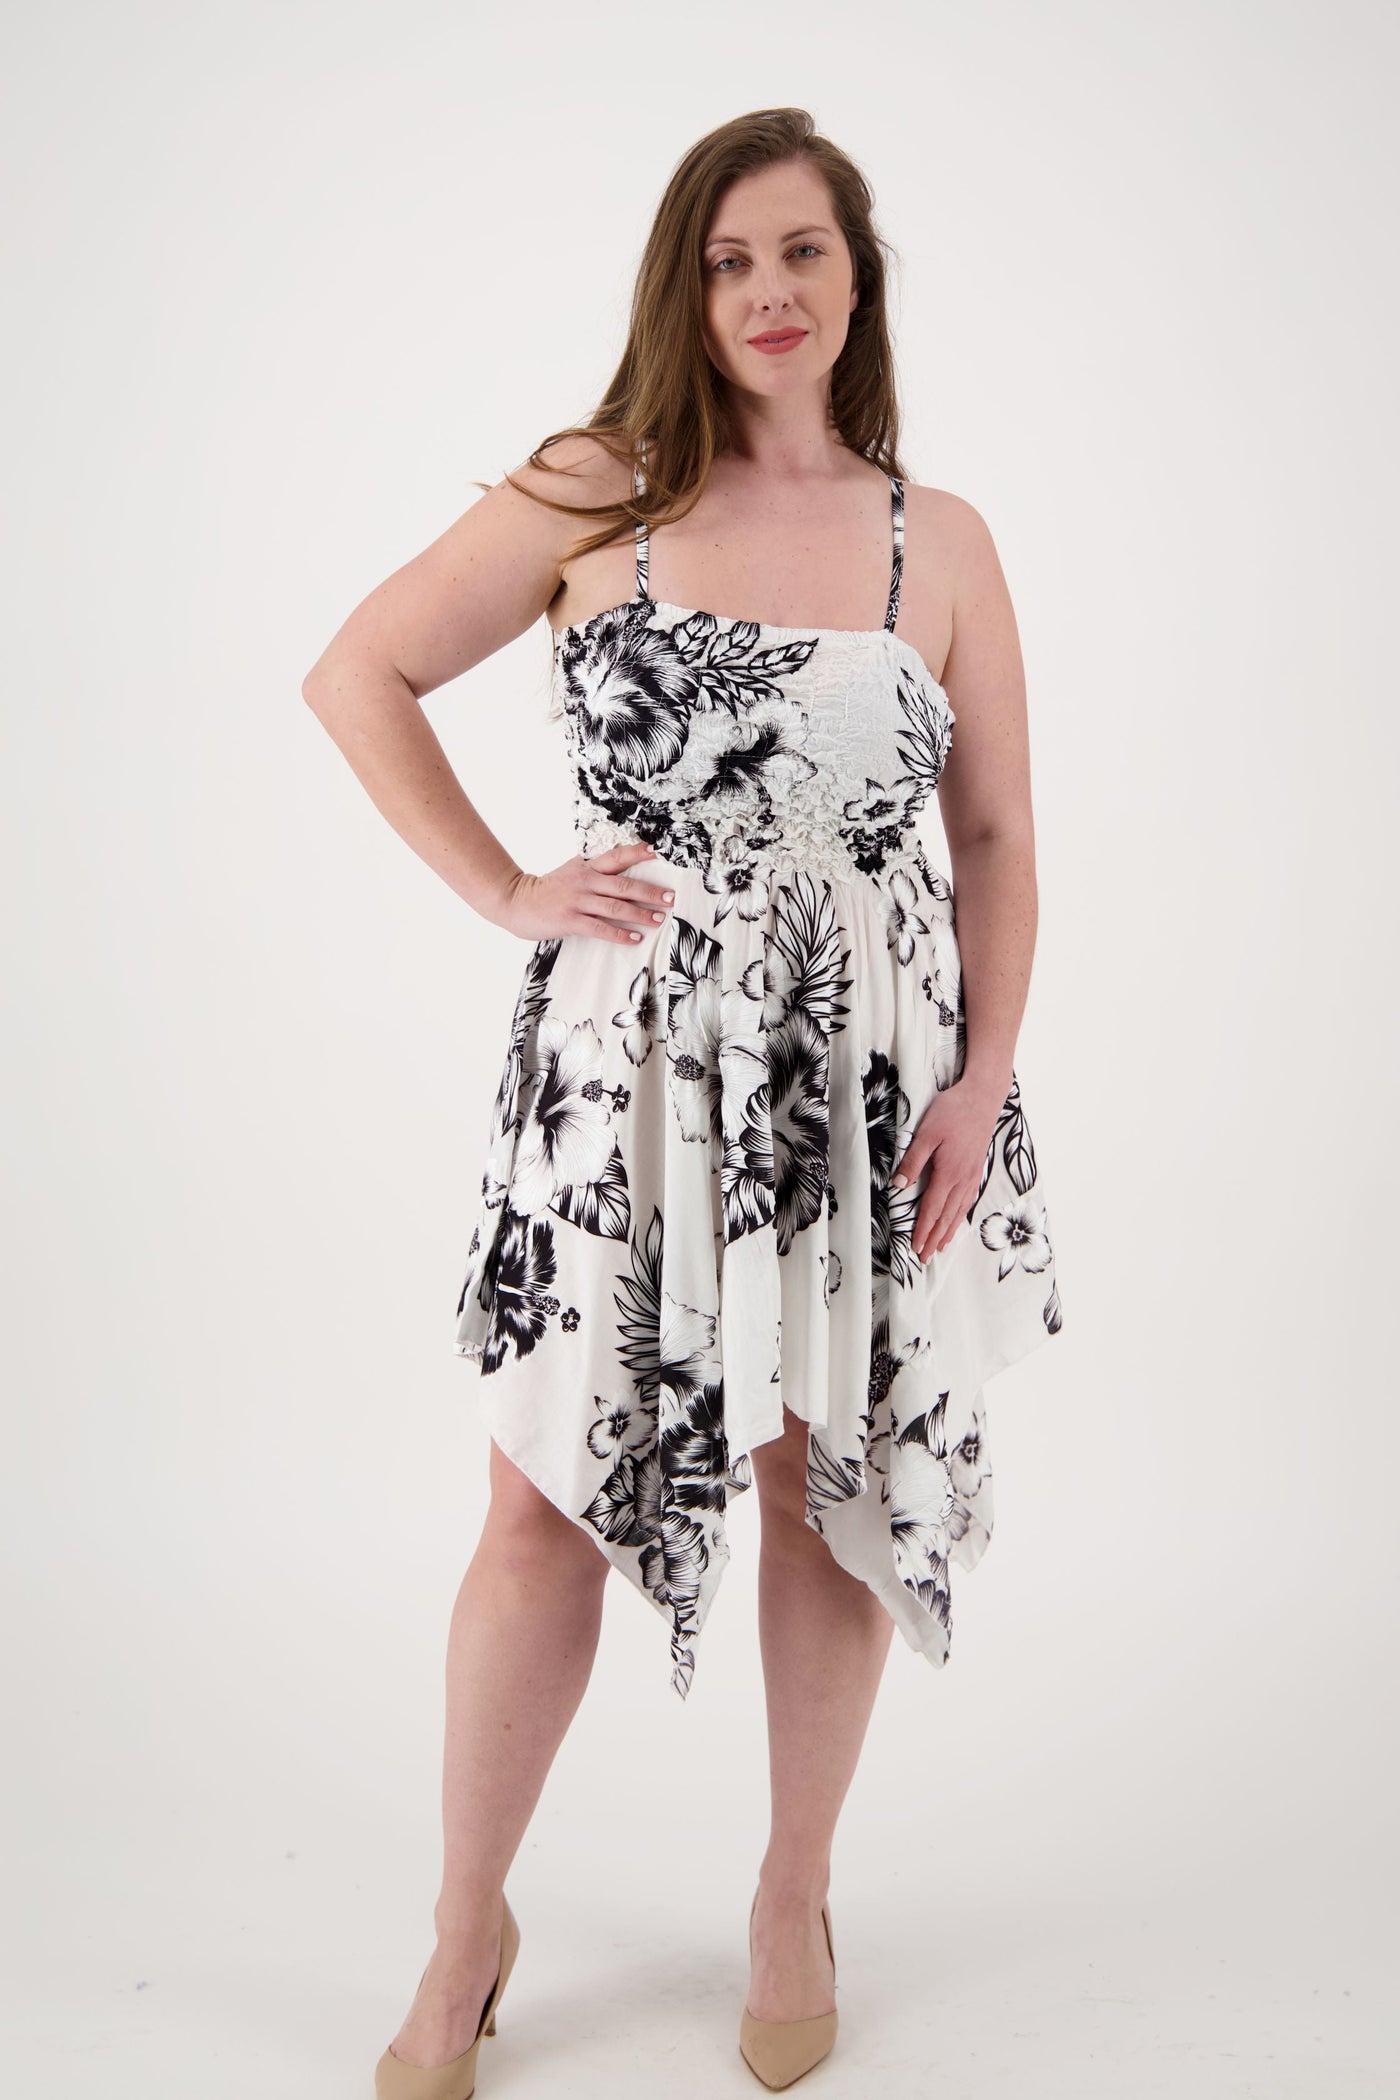 Long Fairytale Bottom Floral Print Beach Dress TH-349 - Advance Apparels Inc